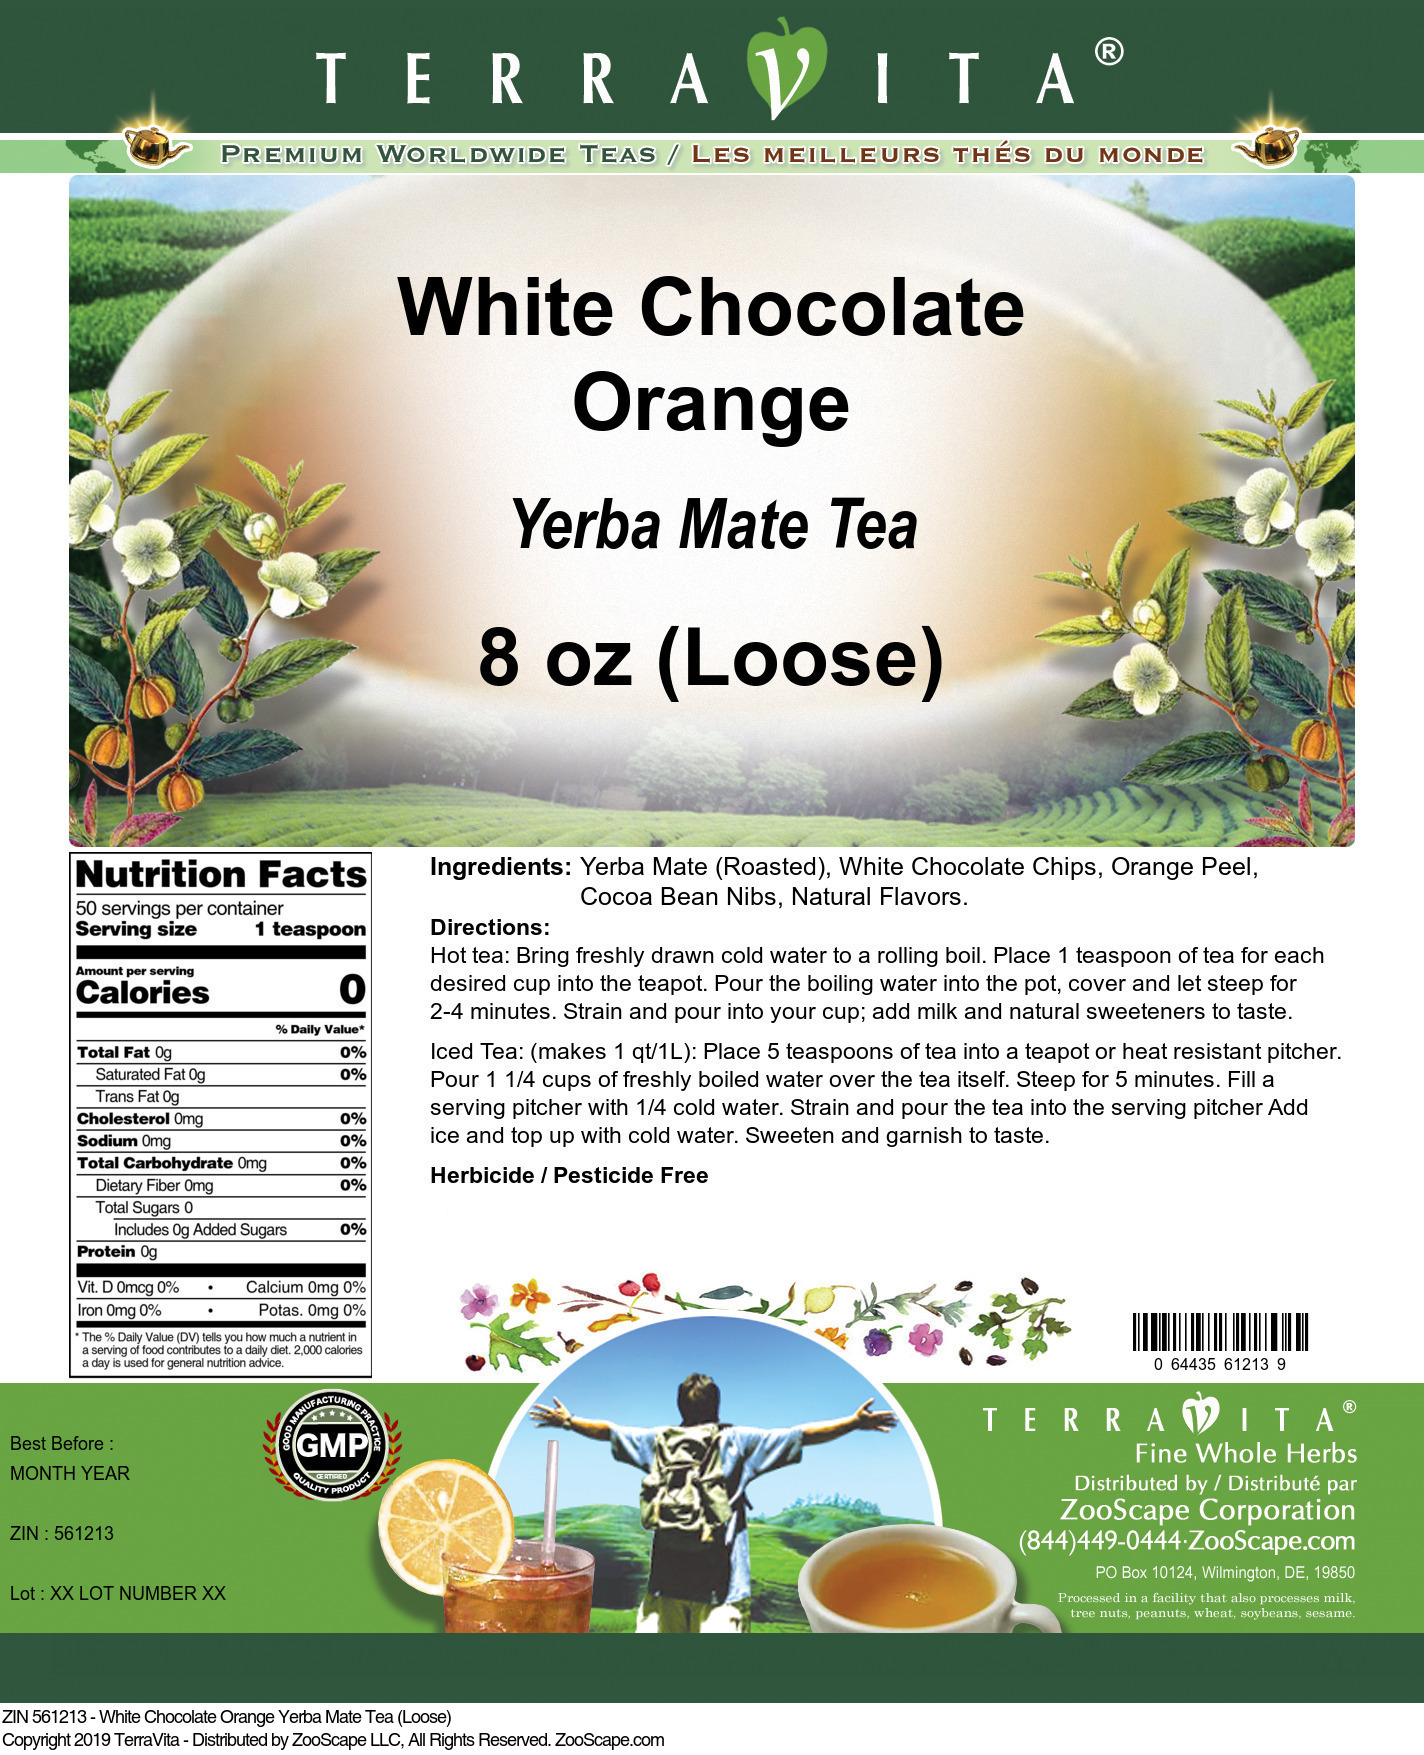 White Chocolate Orange Yerba Mate Tea (Loose) - Label